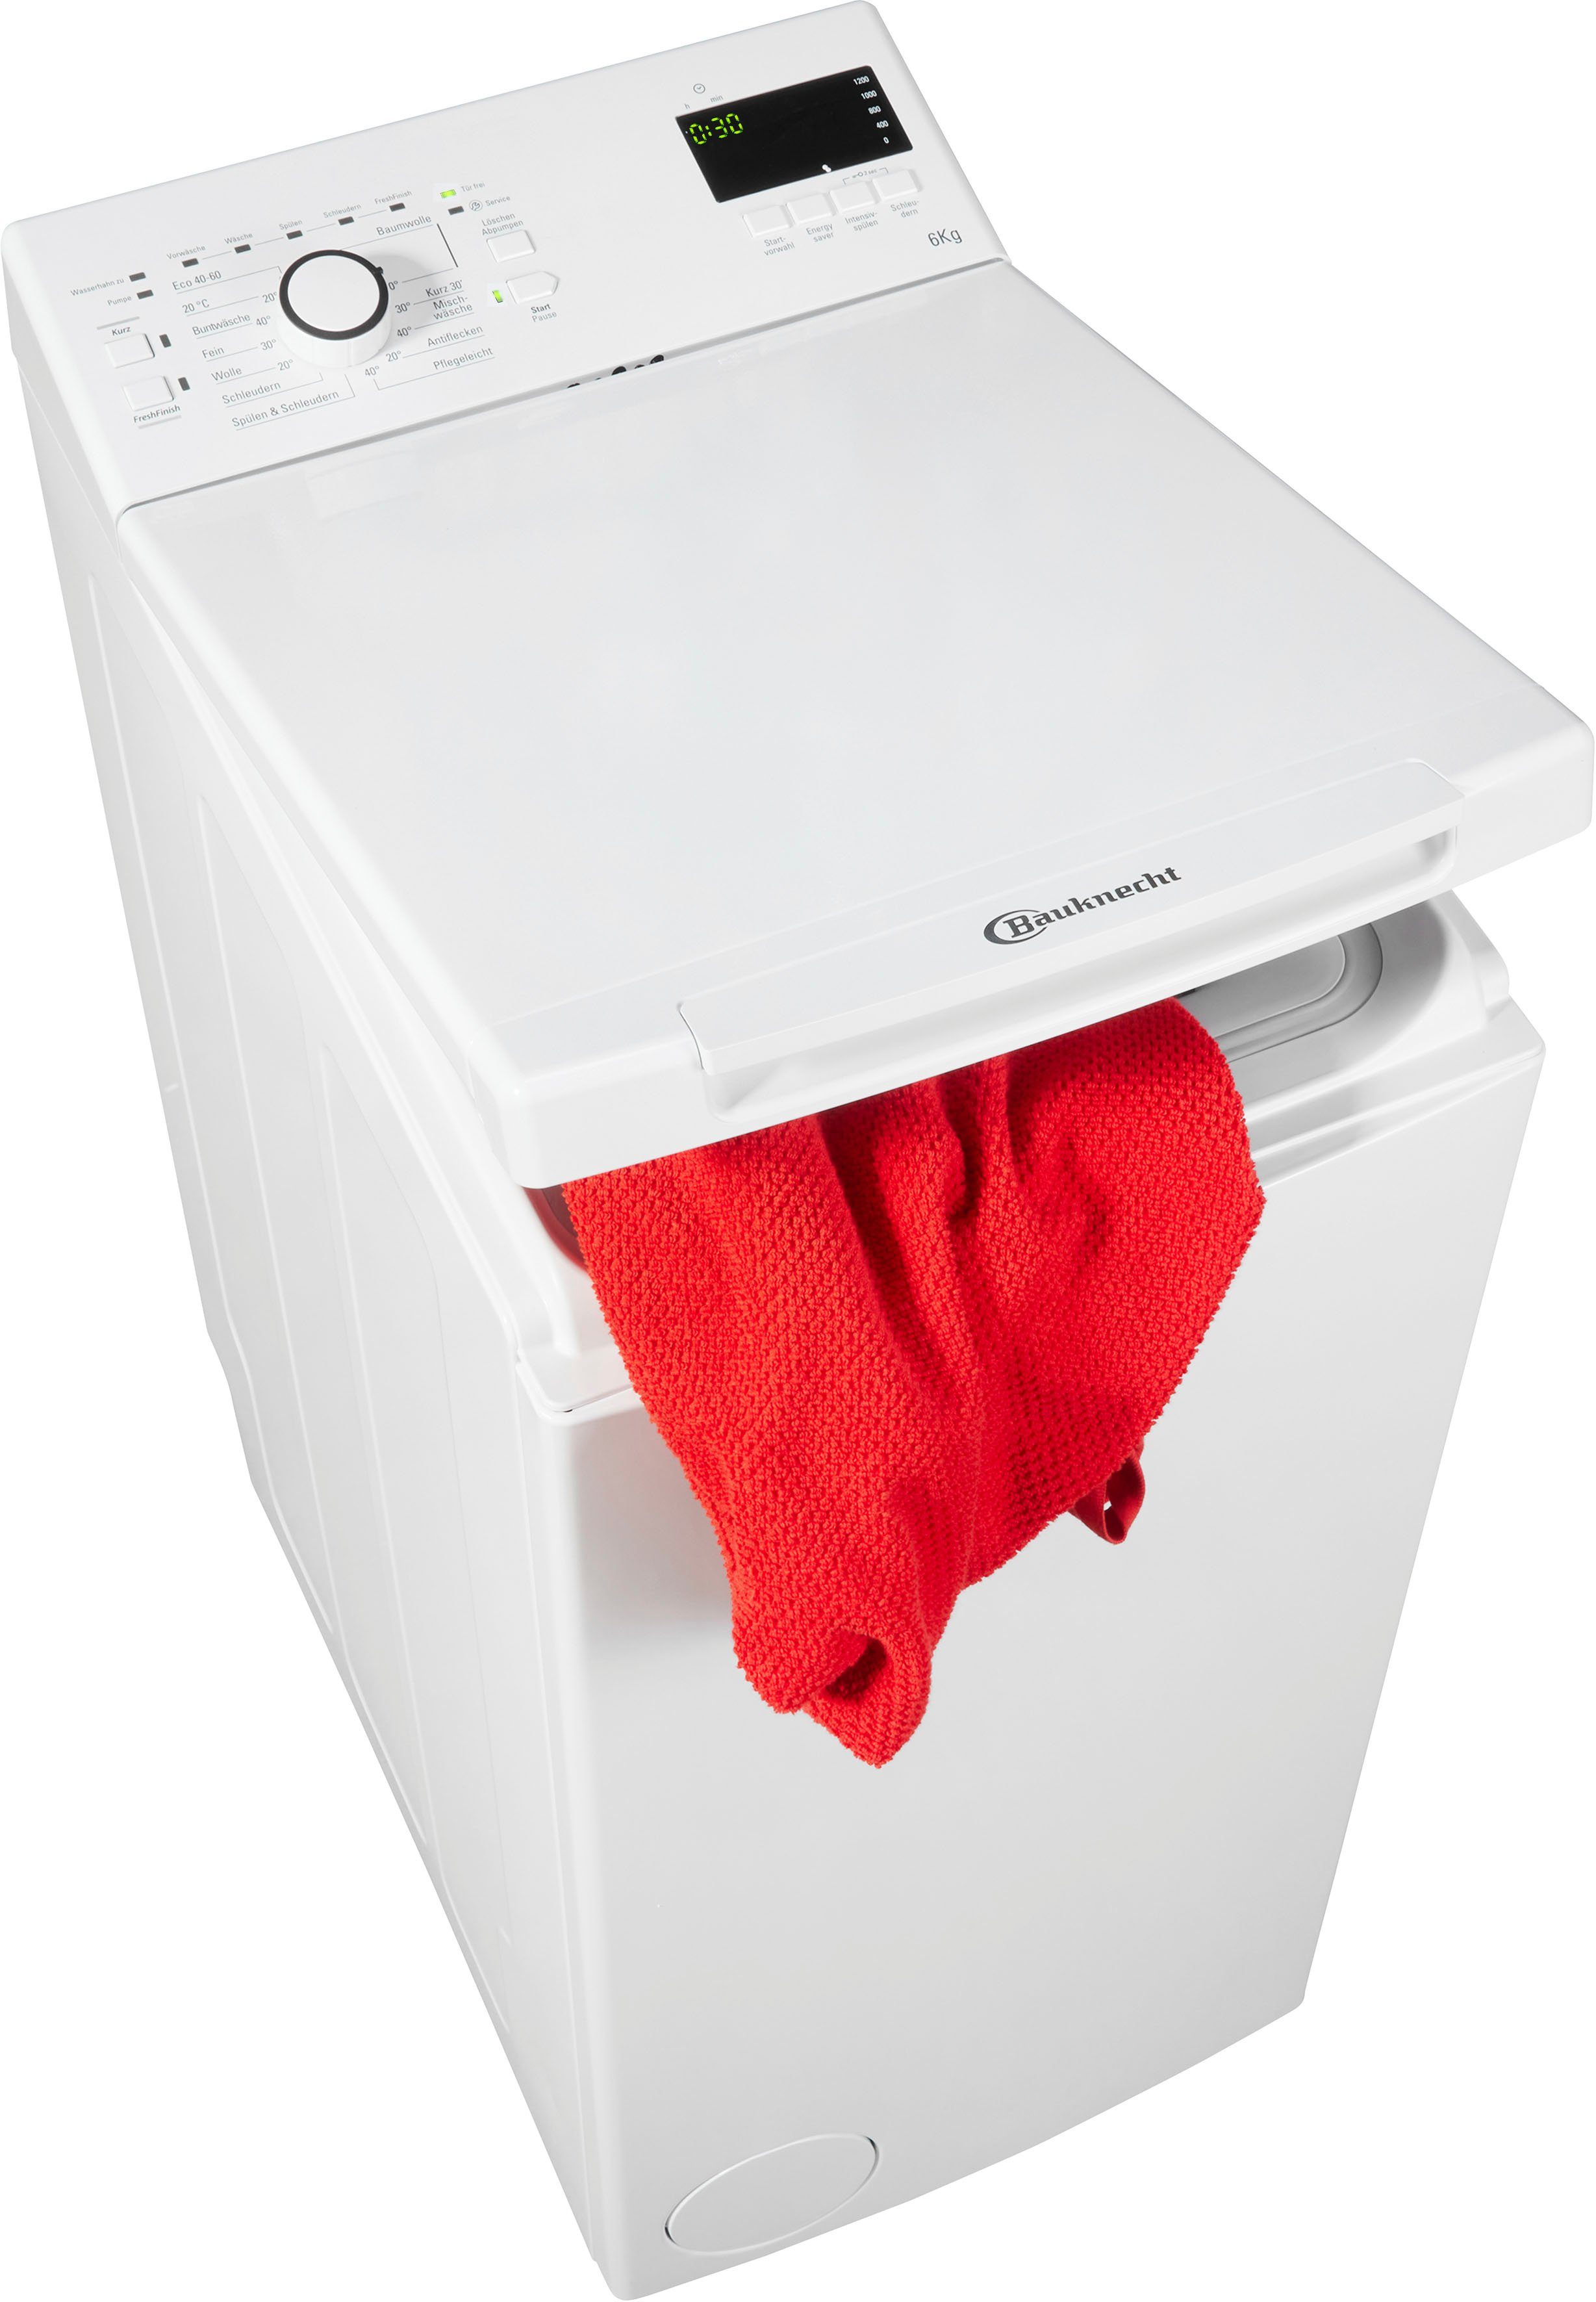 BAUKNECHT Waschmaschine Toplader Eco U/min Smart WAT 6 12C, kg, 1200